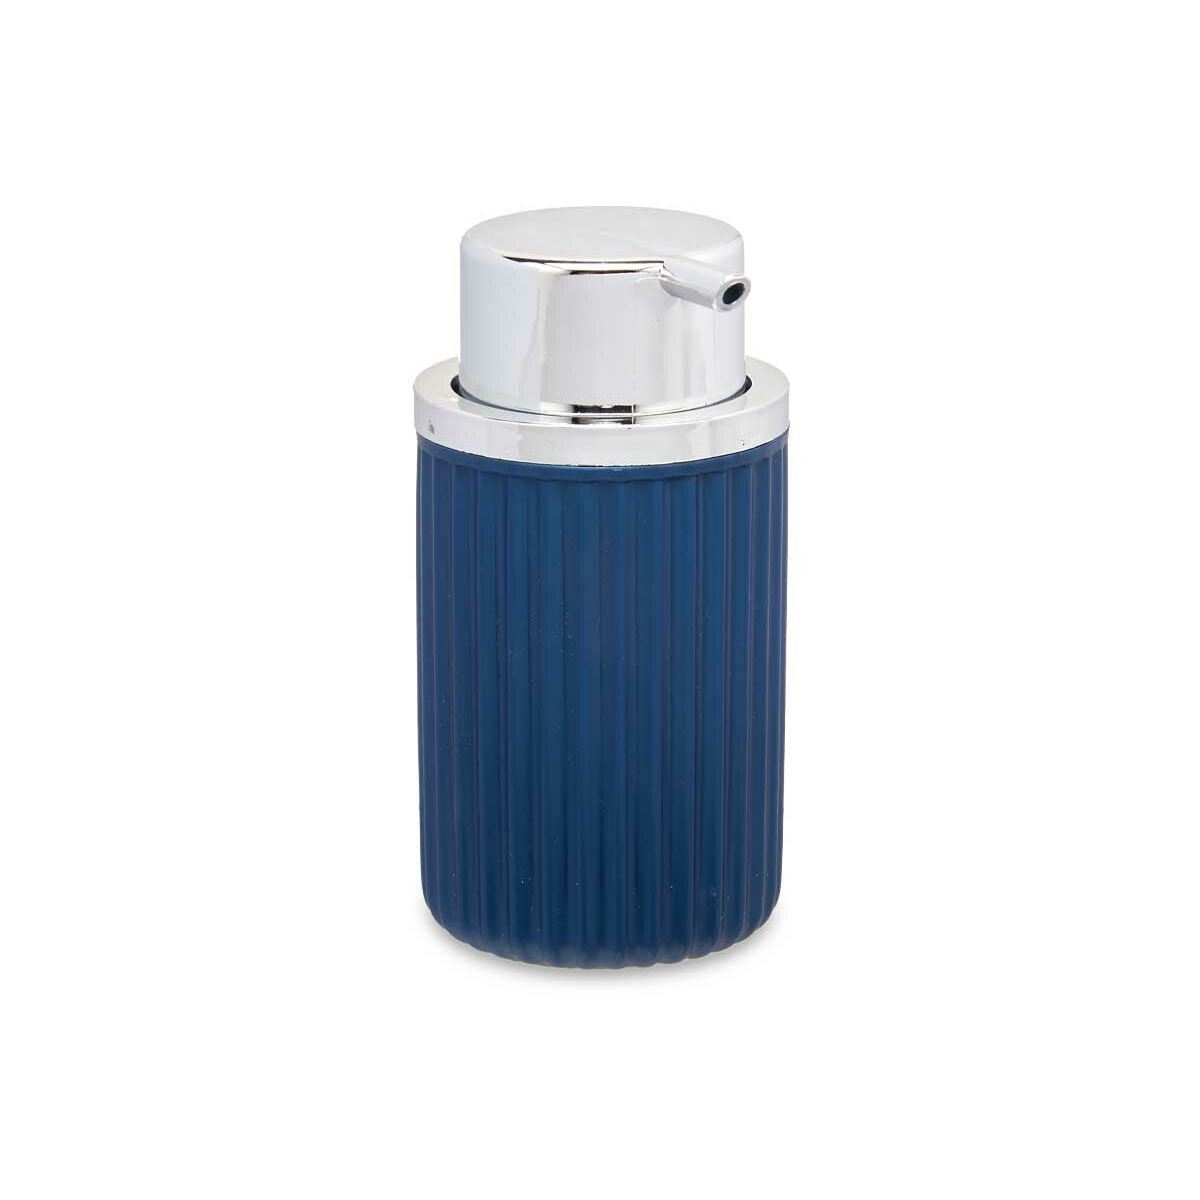 Soap Dispenser Blue Plastic 32 Units (420 ml)